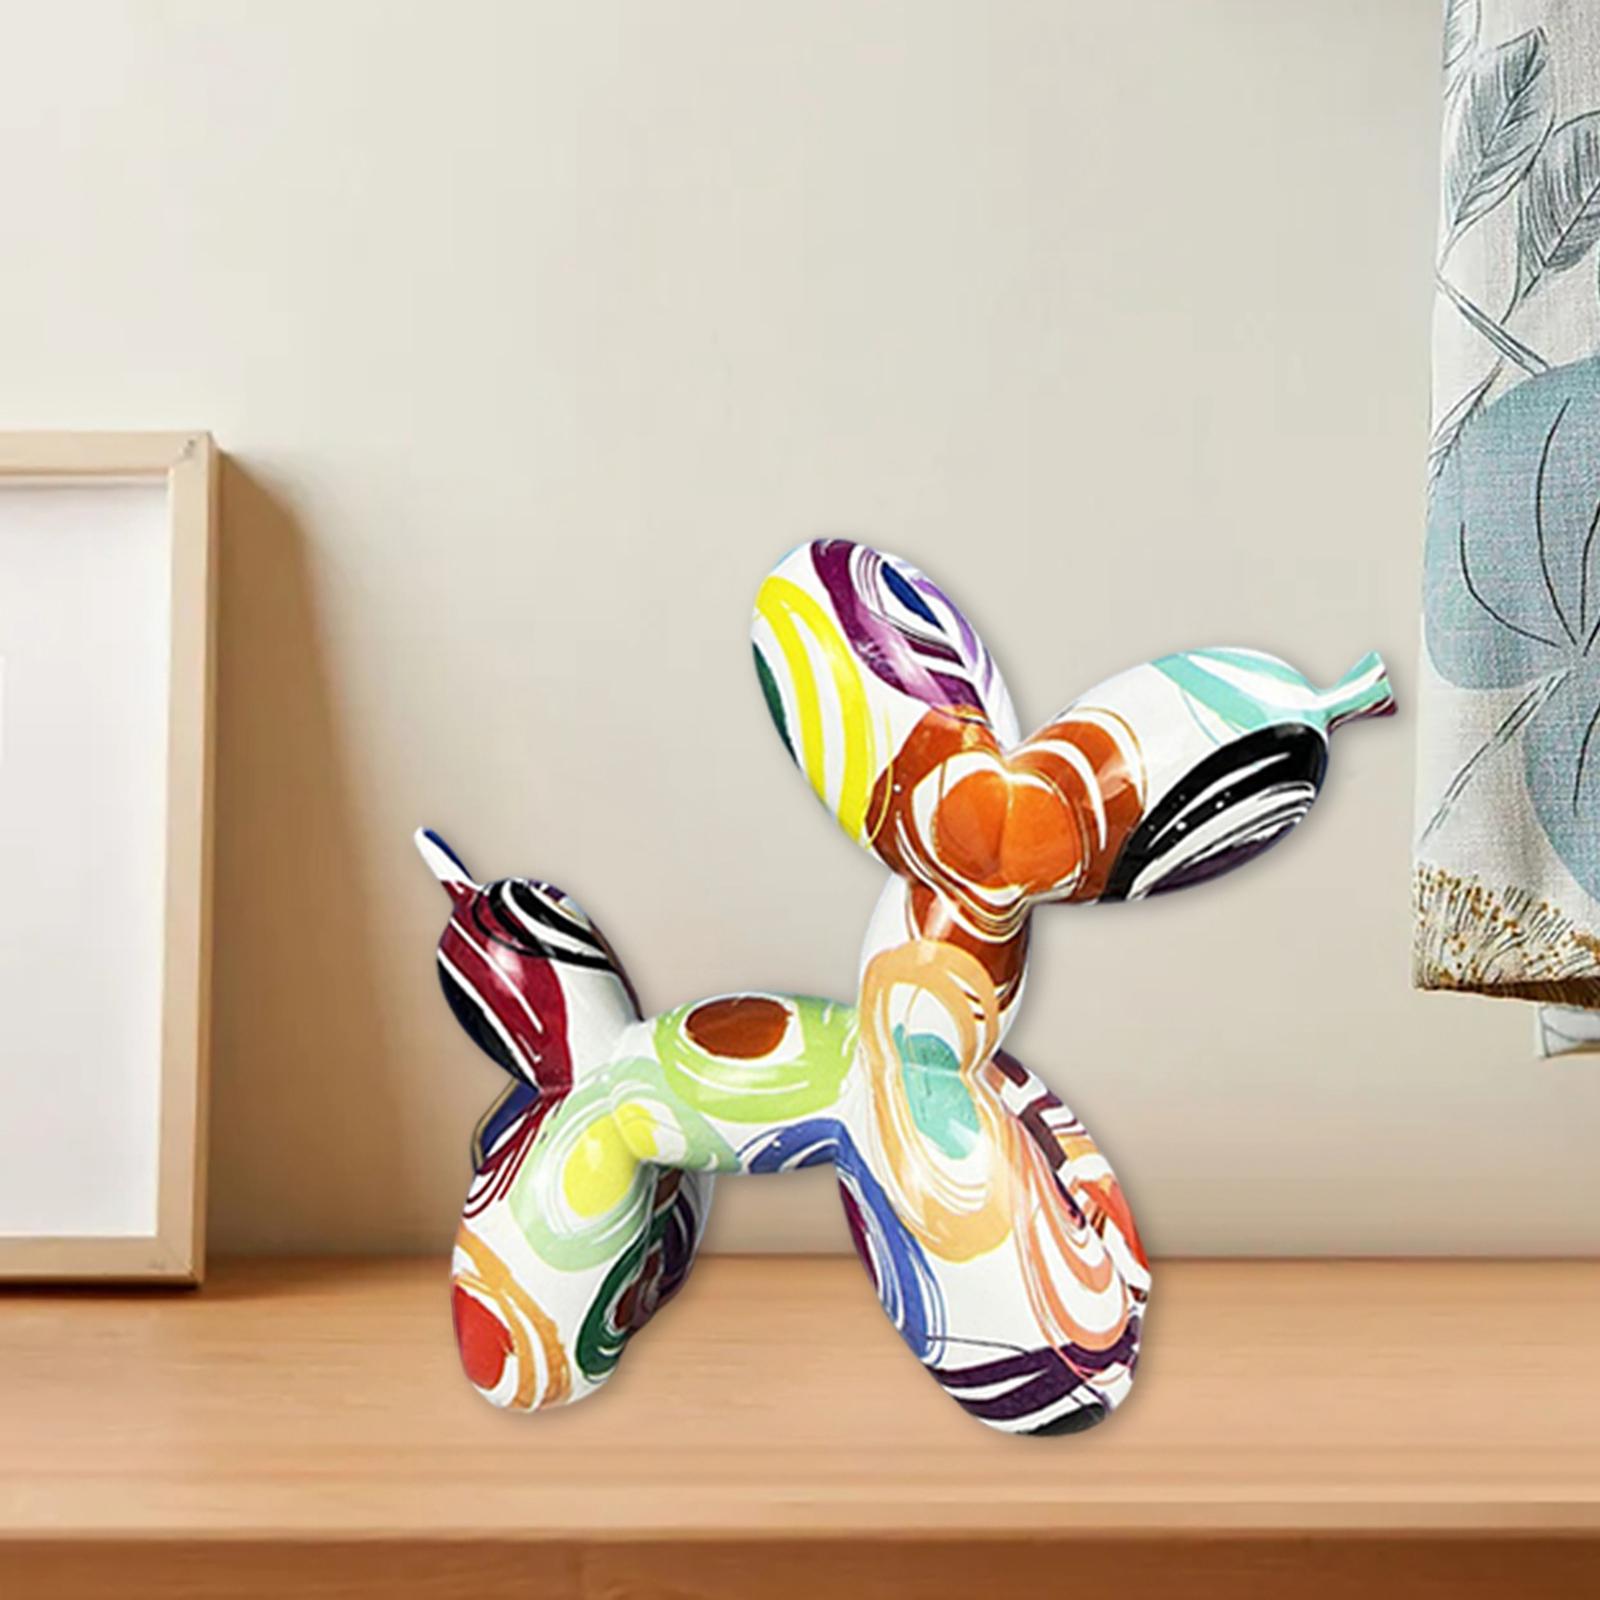 Scrawl Balloon Dog Sculpture Animal Statue Art Crafts for Home Kids Room C